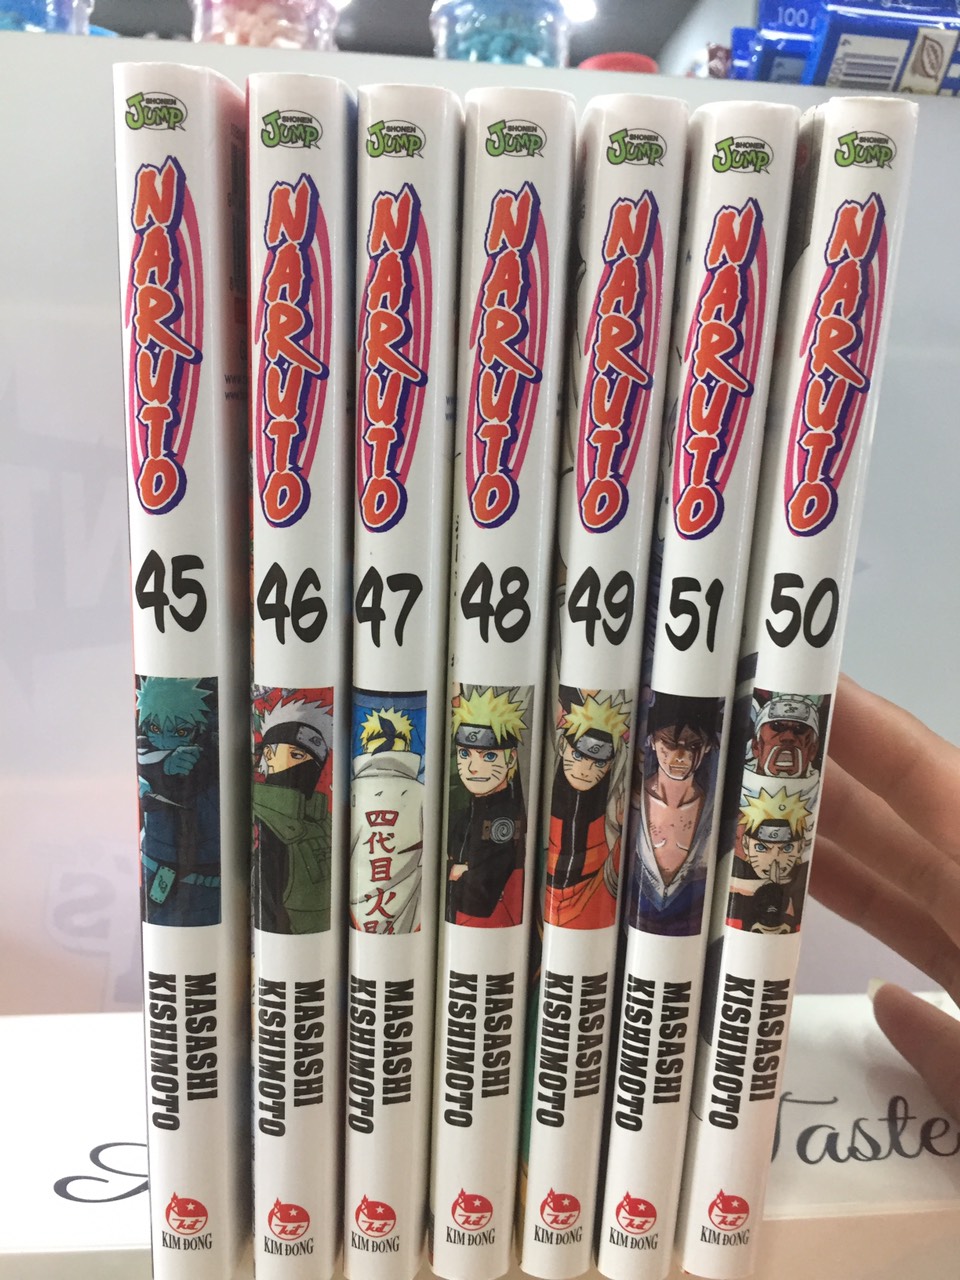 Truyện tranh Naruto